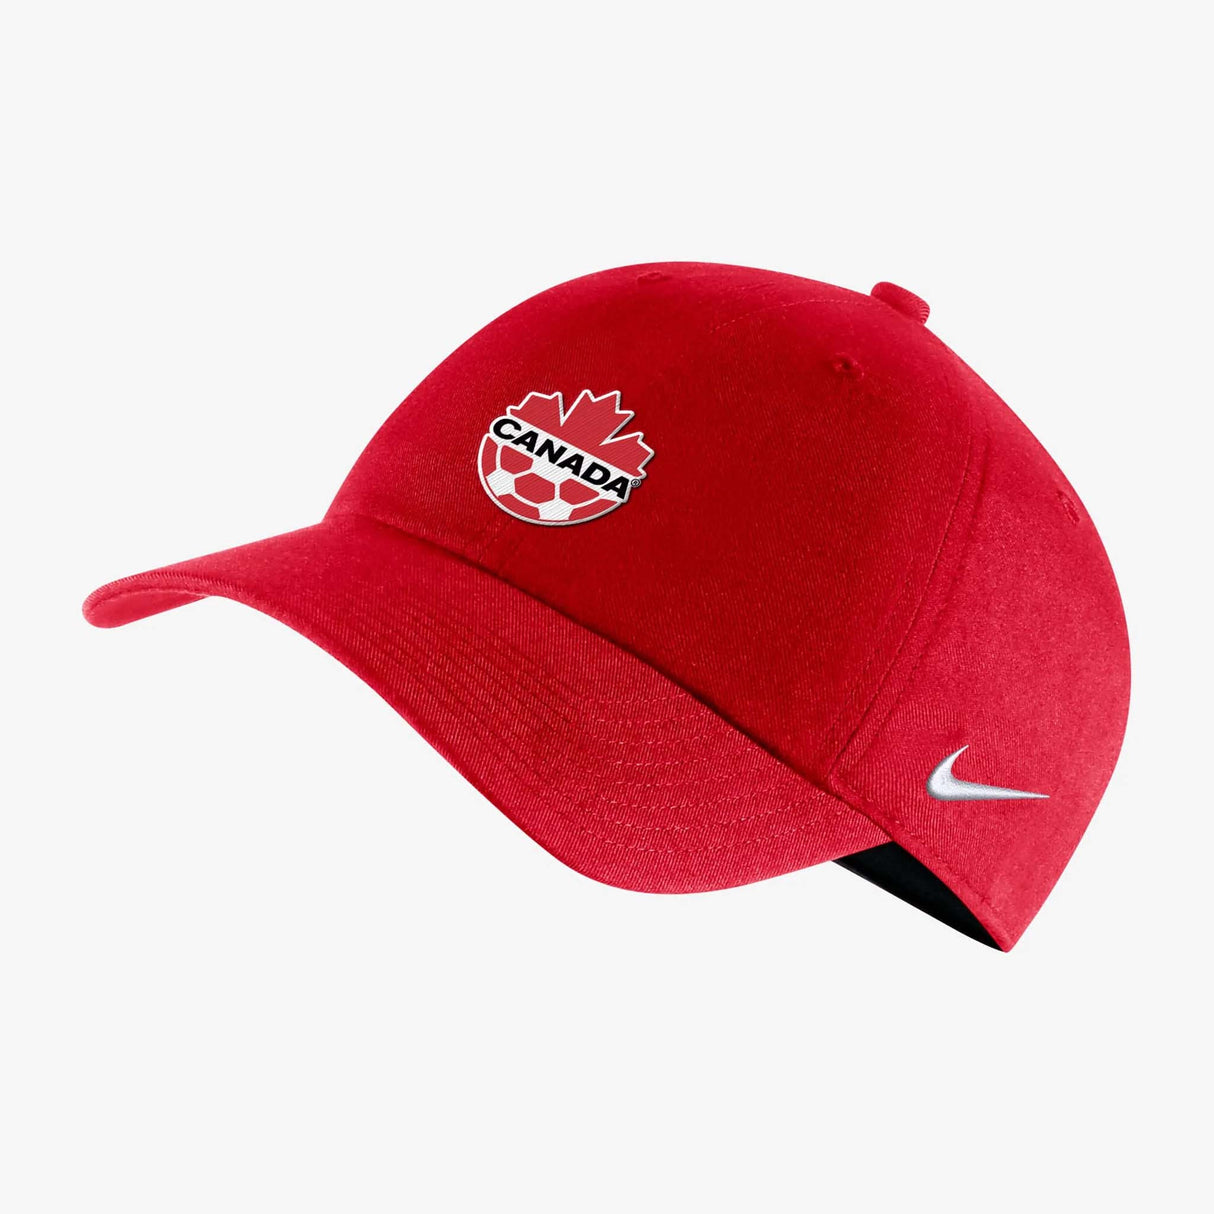 Nike Heritage 86 Soccer Canada casquette ajustable de l'équipe nationale canadienne - rouge